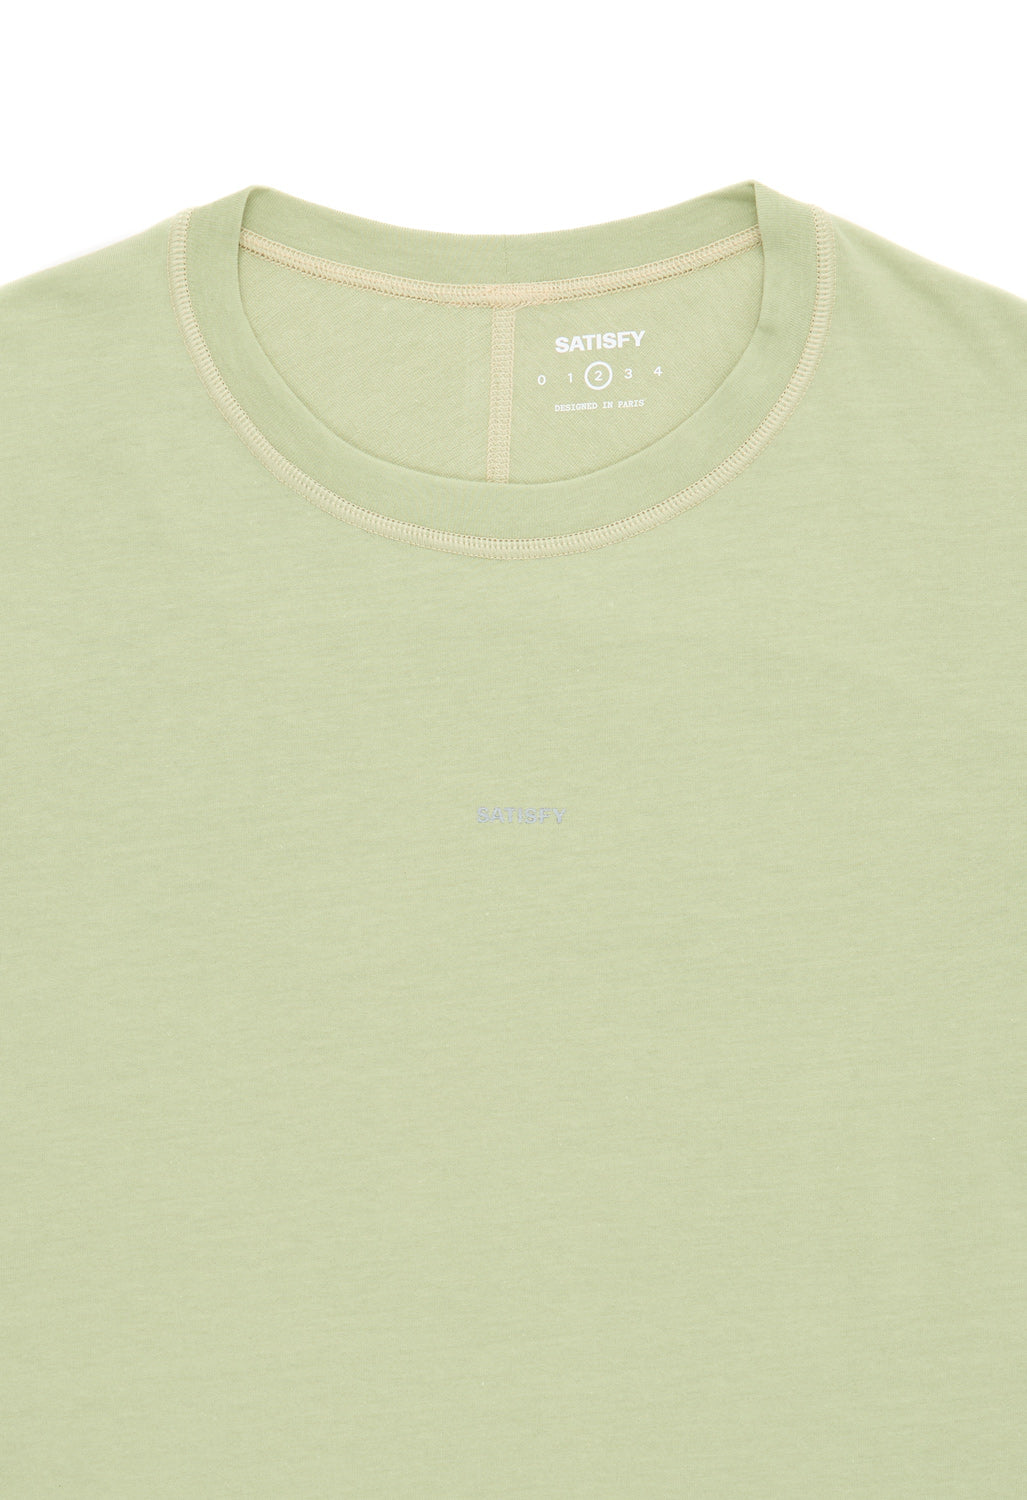 Satisfy Men's Softcell Cordura T-Shirt - Sage Green